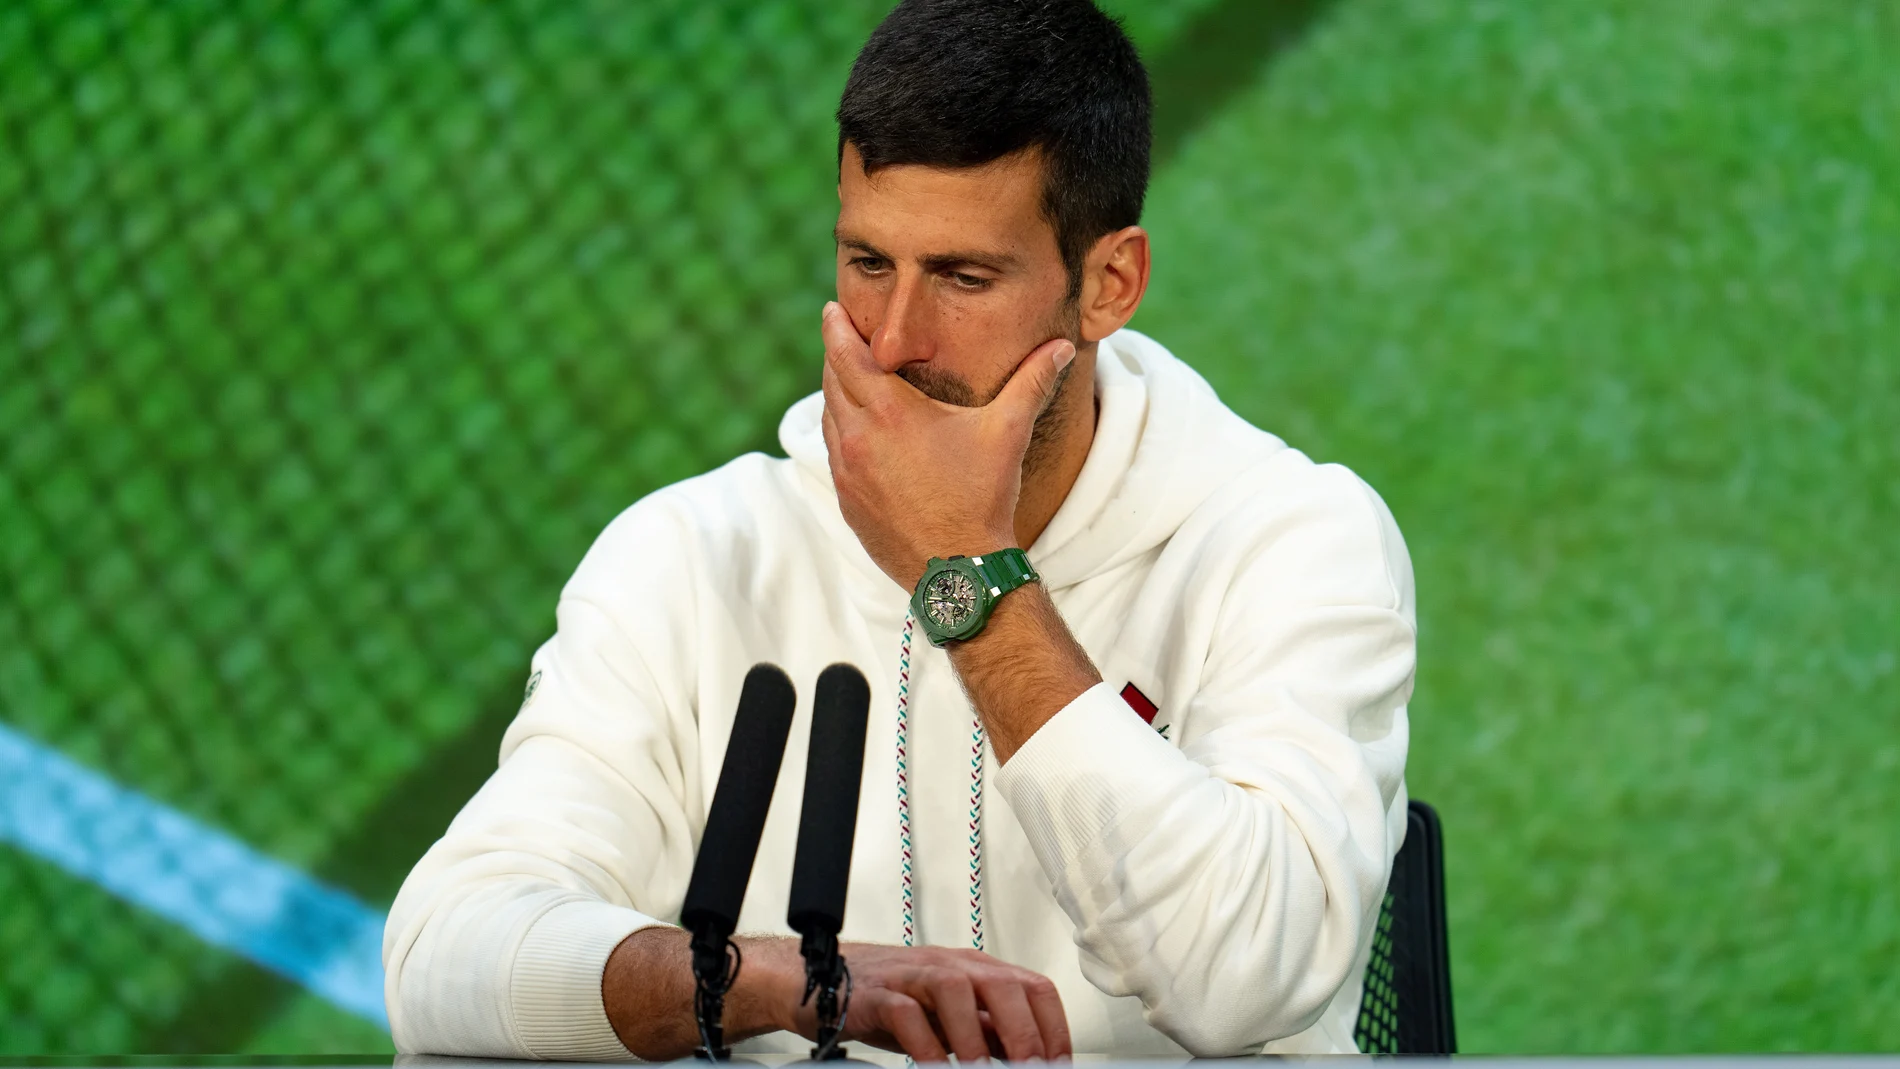 Coluna Gran Willy: A regra vale para todos, inclusive para Novak Djokovic -  Surto Olímpico